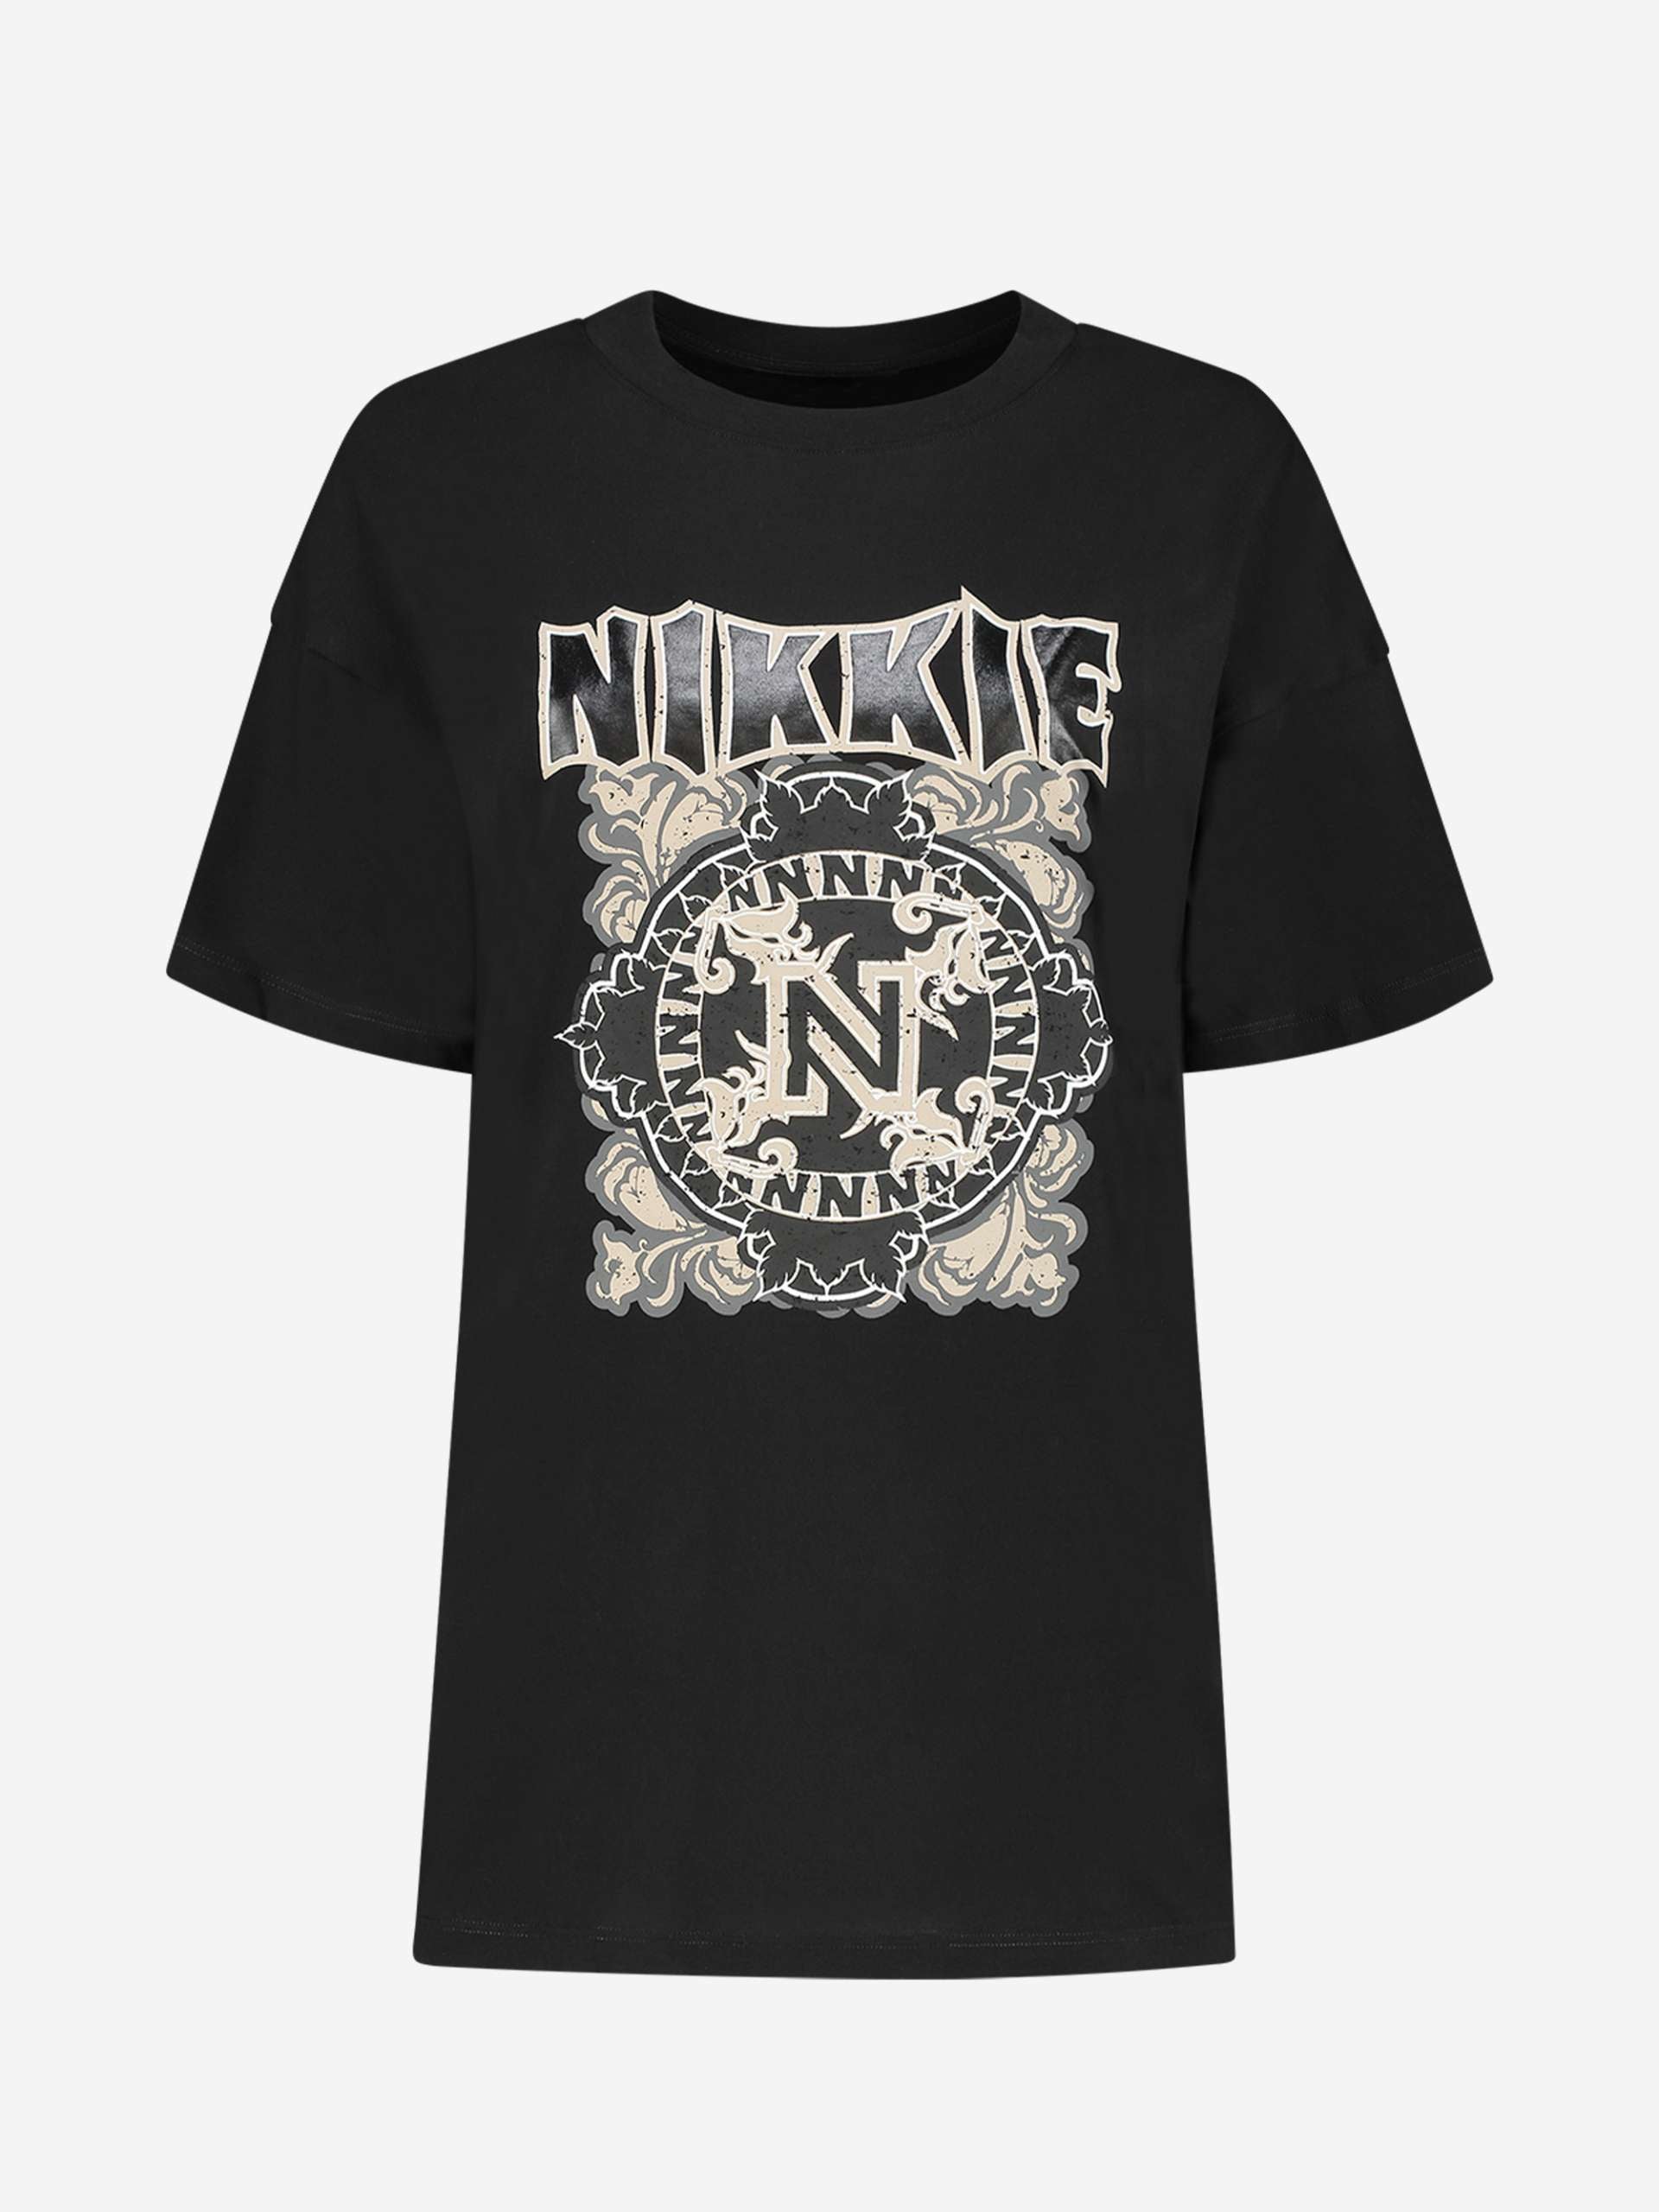 Nikkie Ornament t Shirt - black